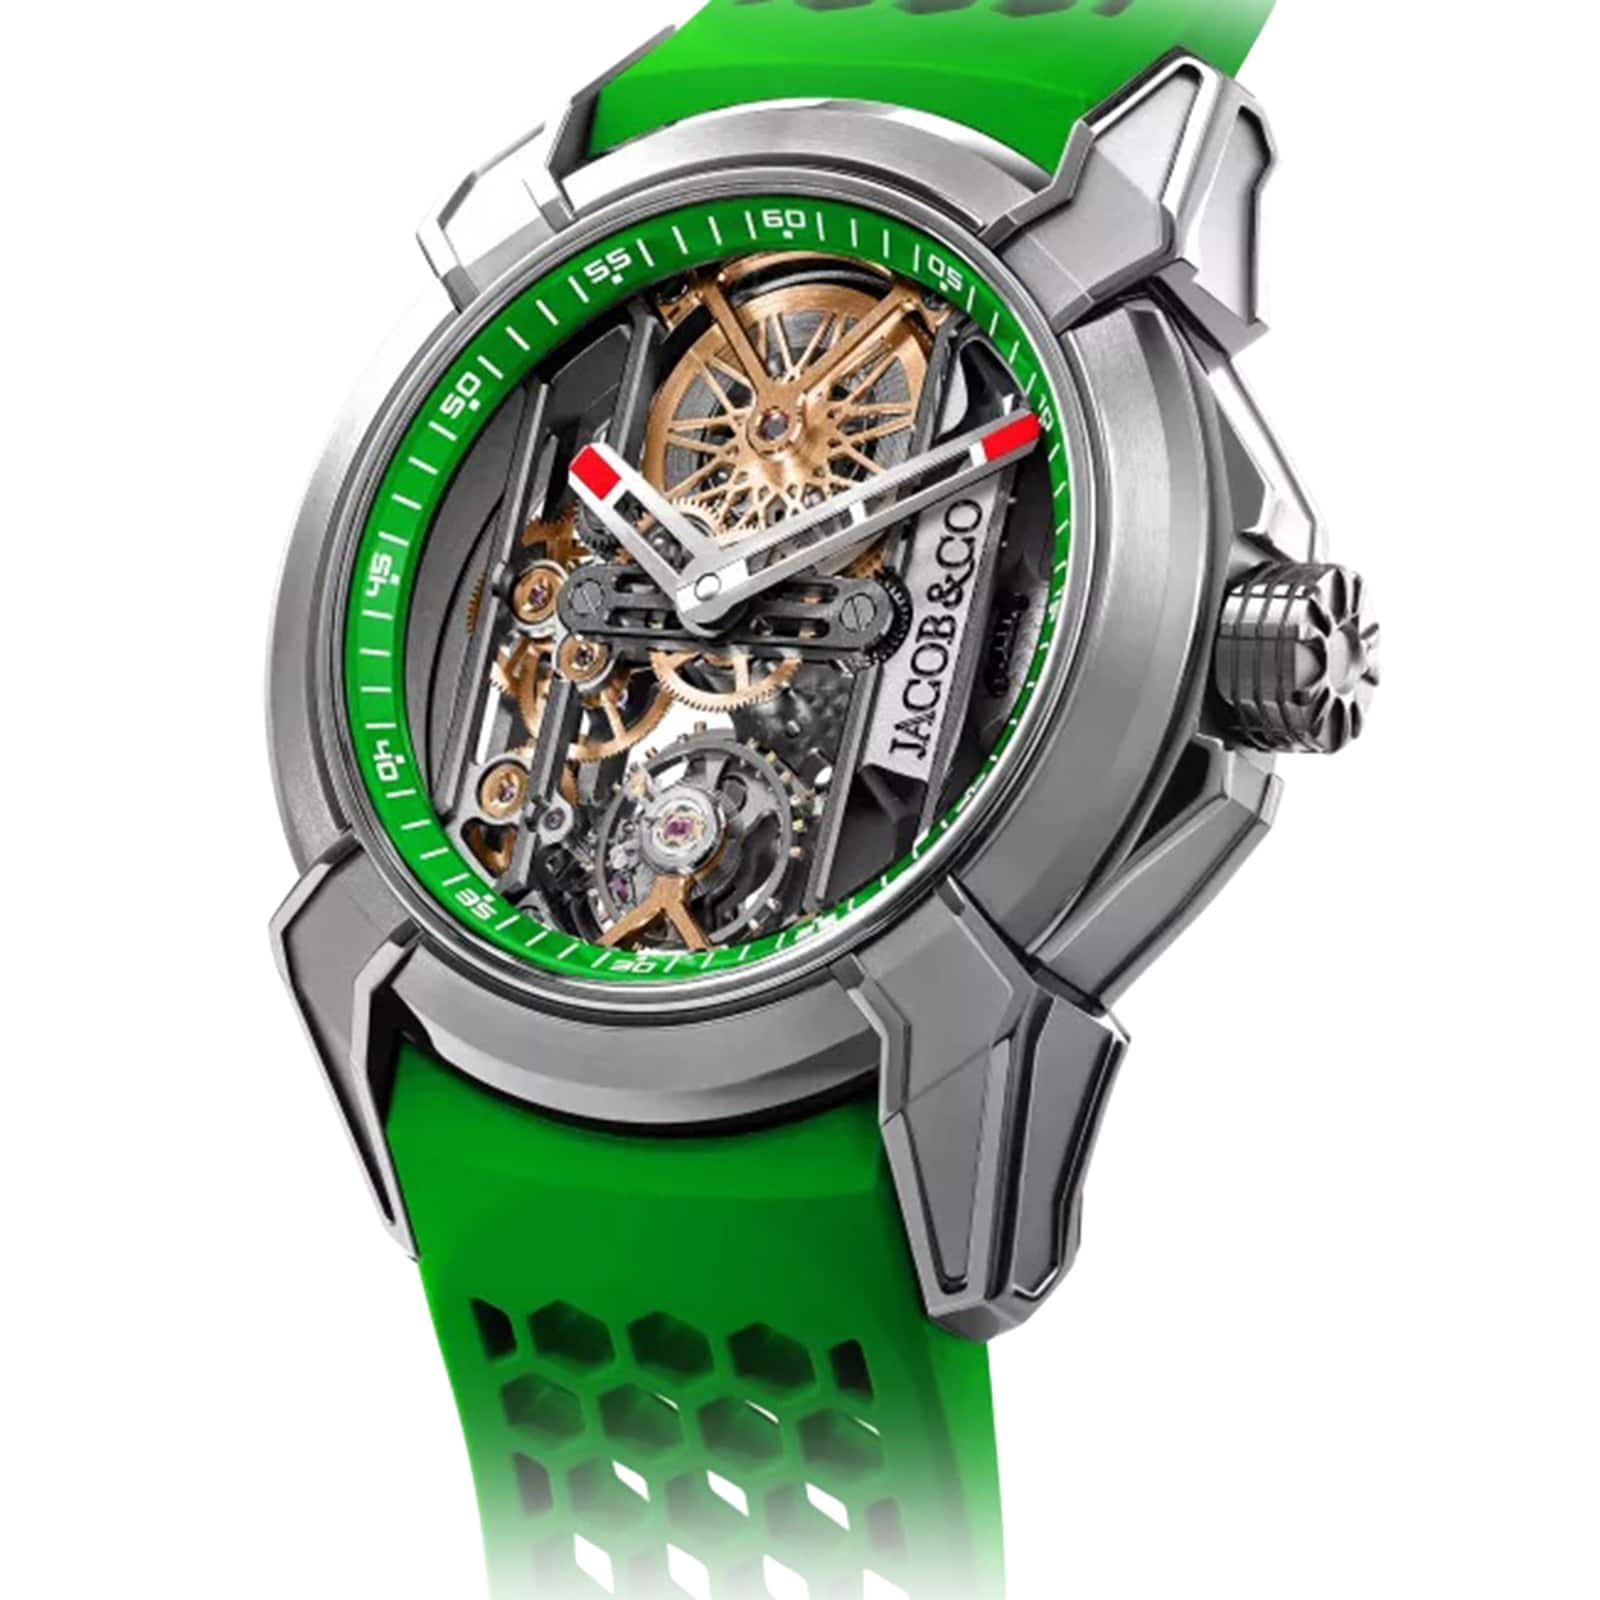 Epic X Titanium Green Watch